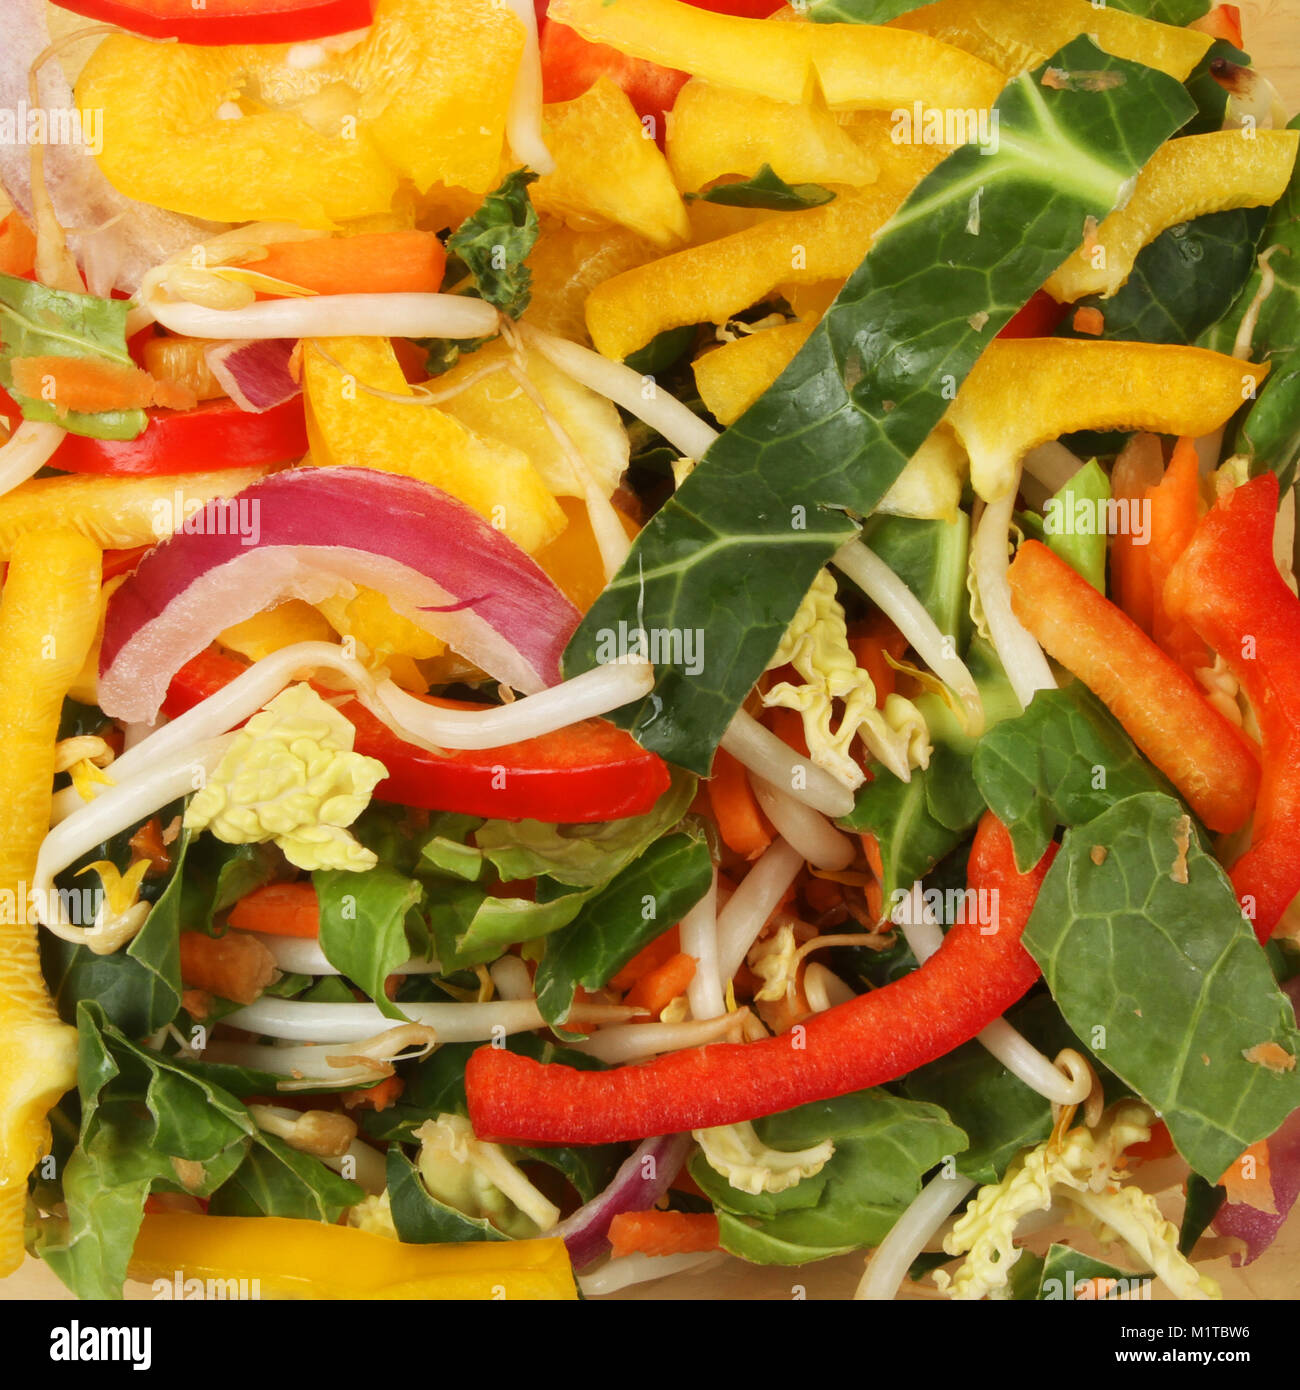 Closeup of stir fry vegetables Stock Photo